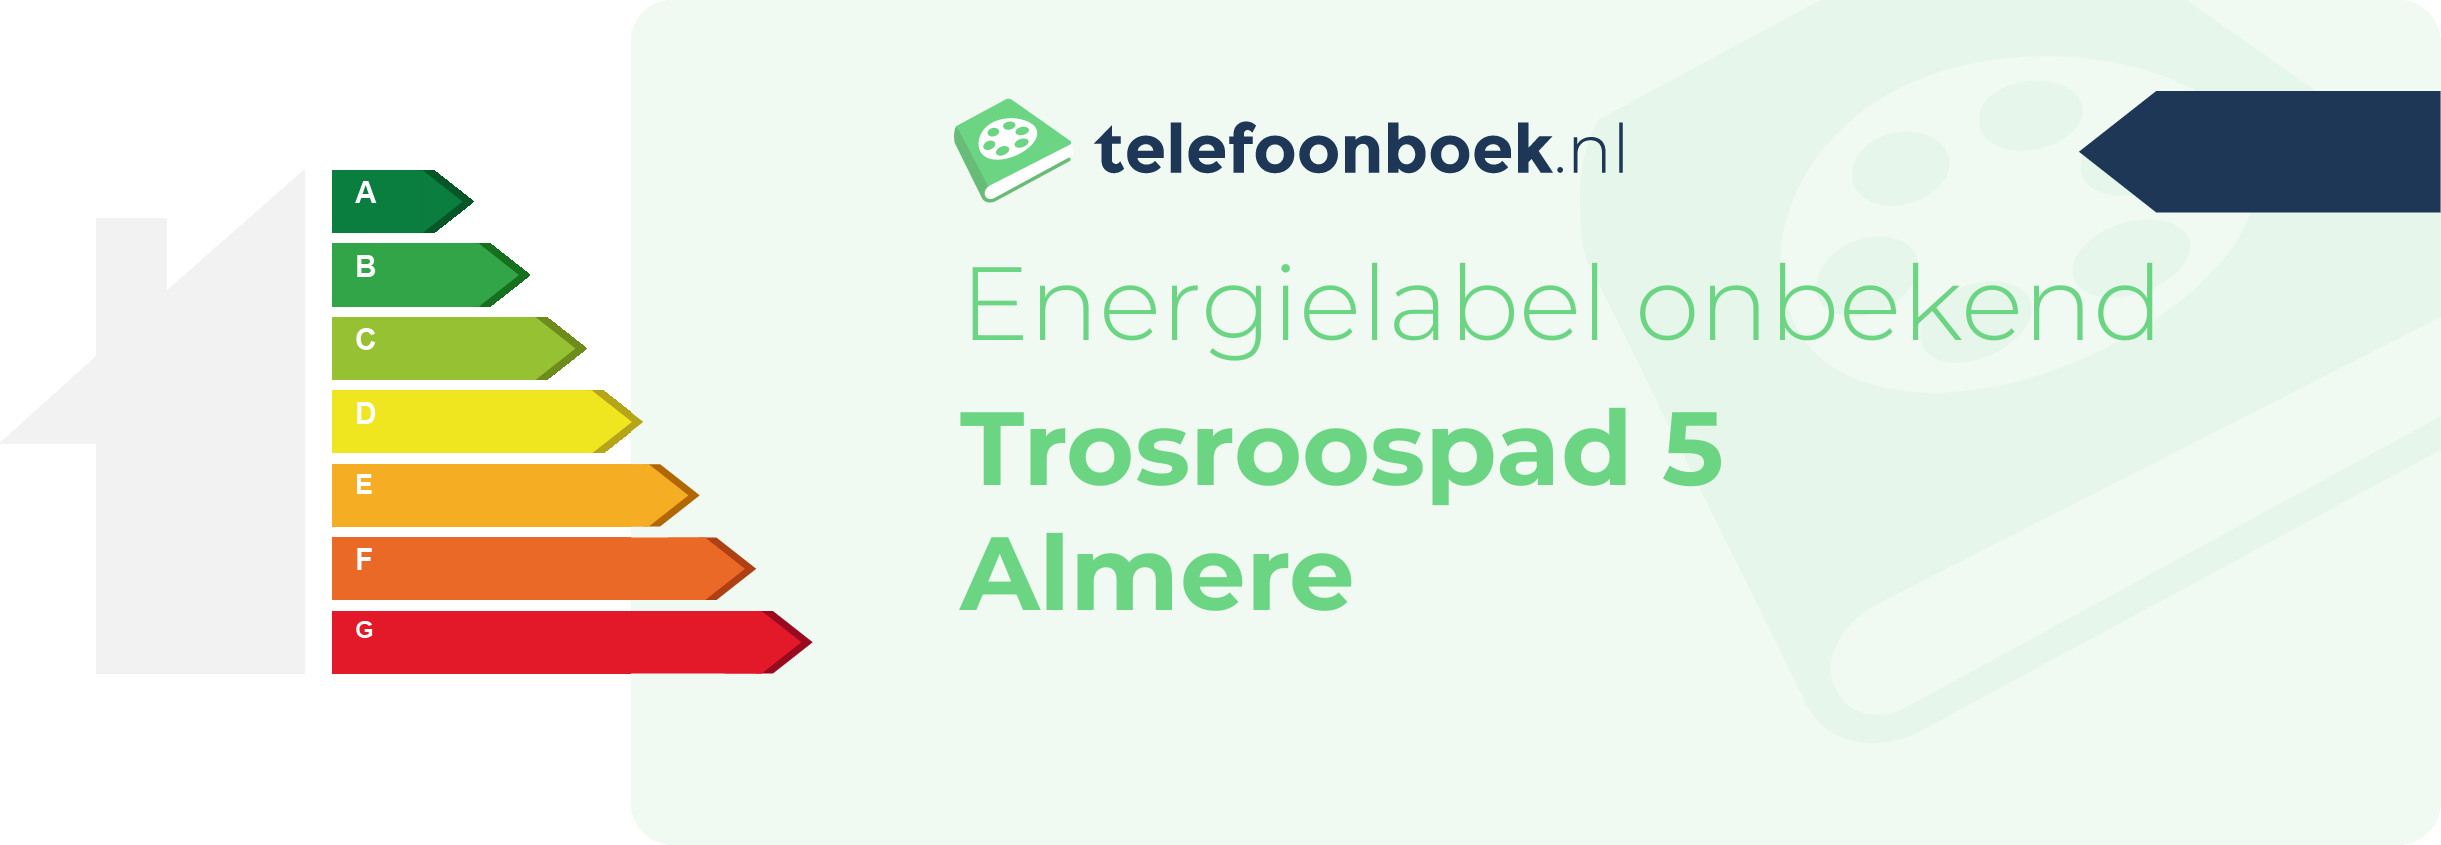 Energielabel Trosroospad 5 Almere